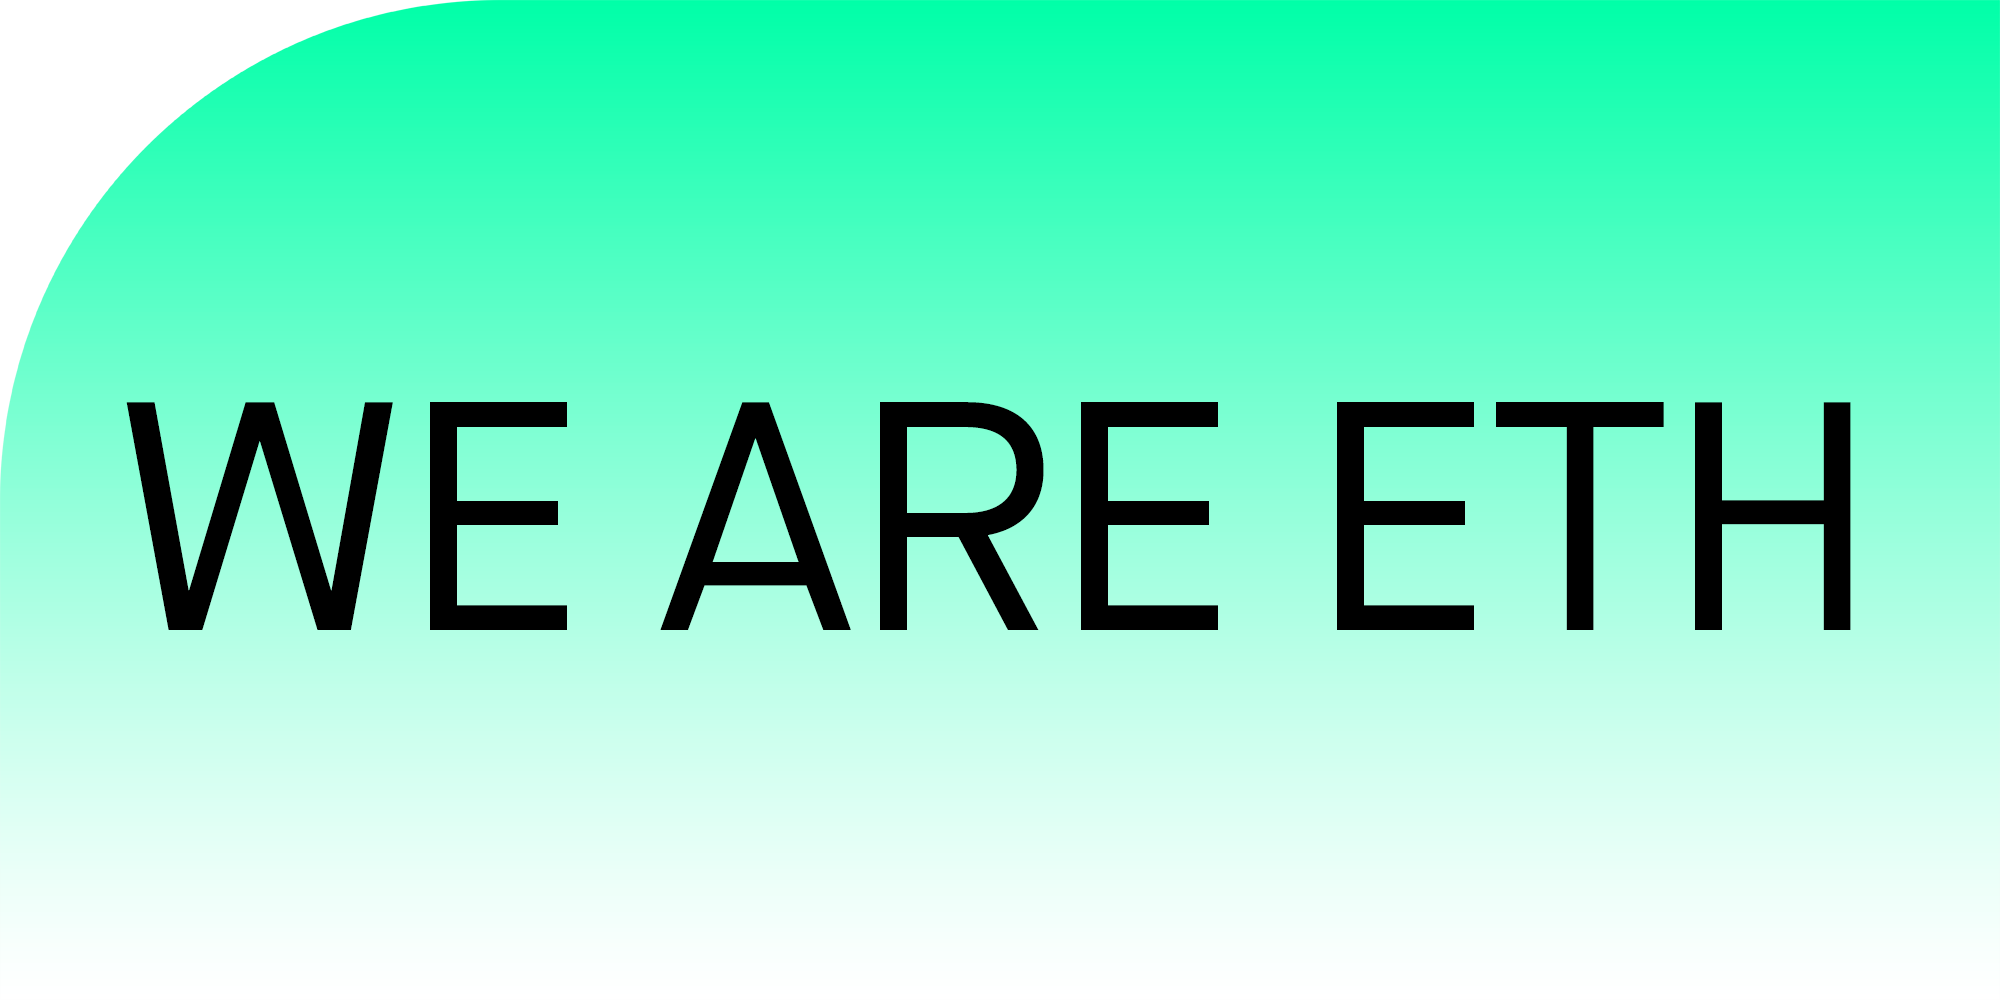 ETH ALumni Podcast: We are ETH